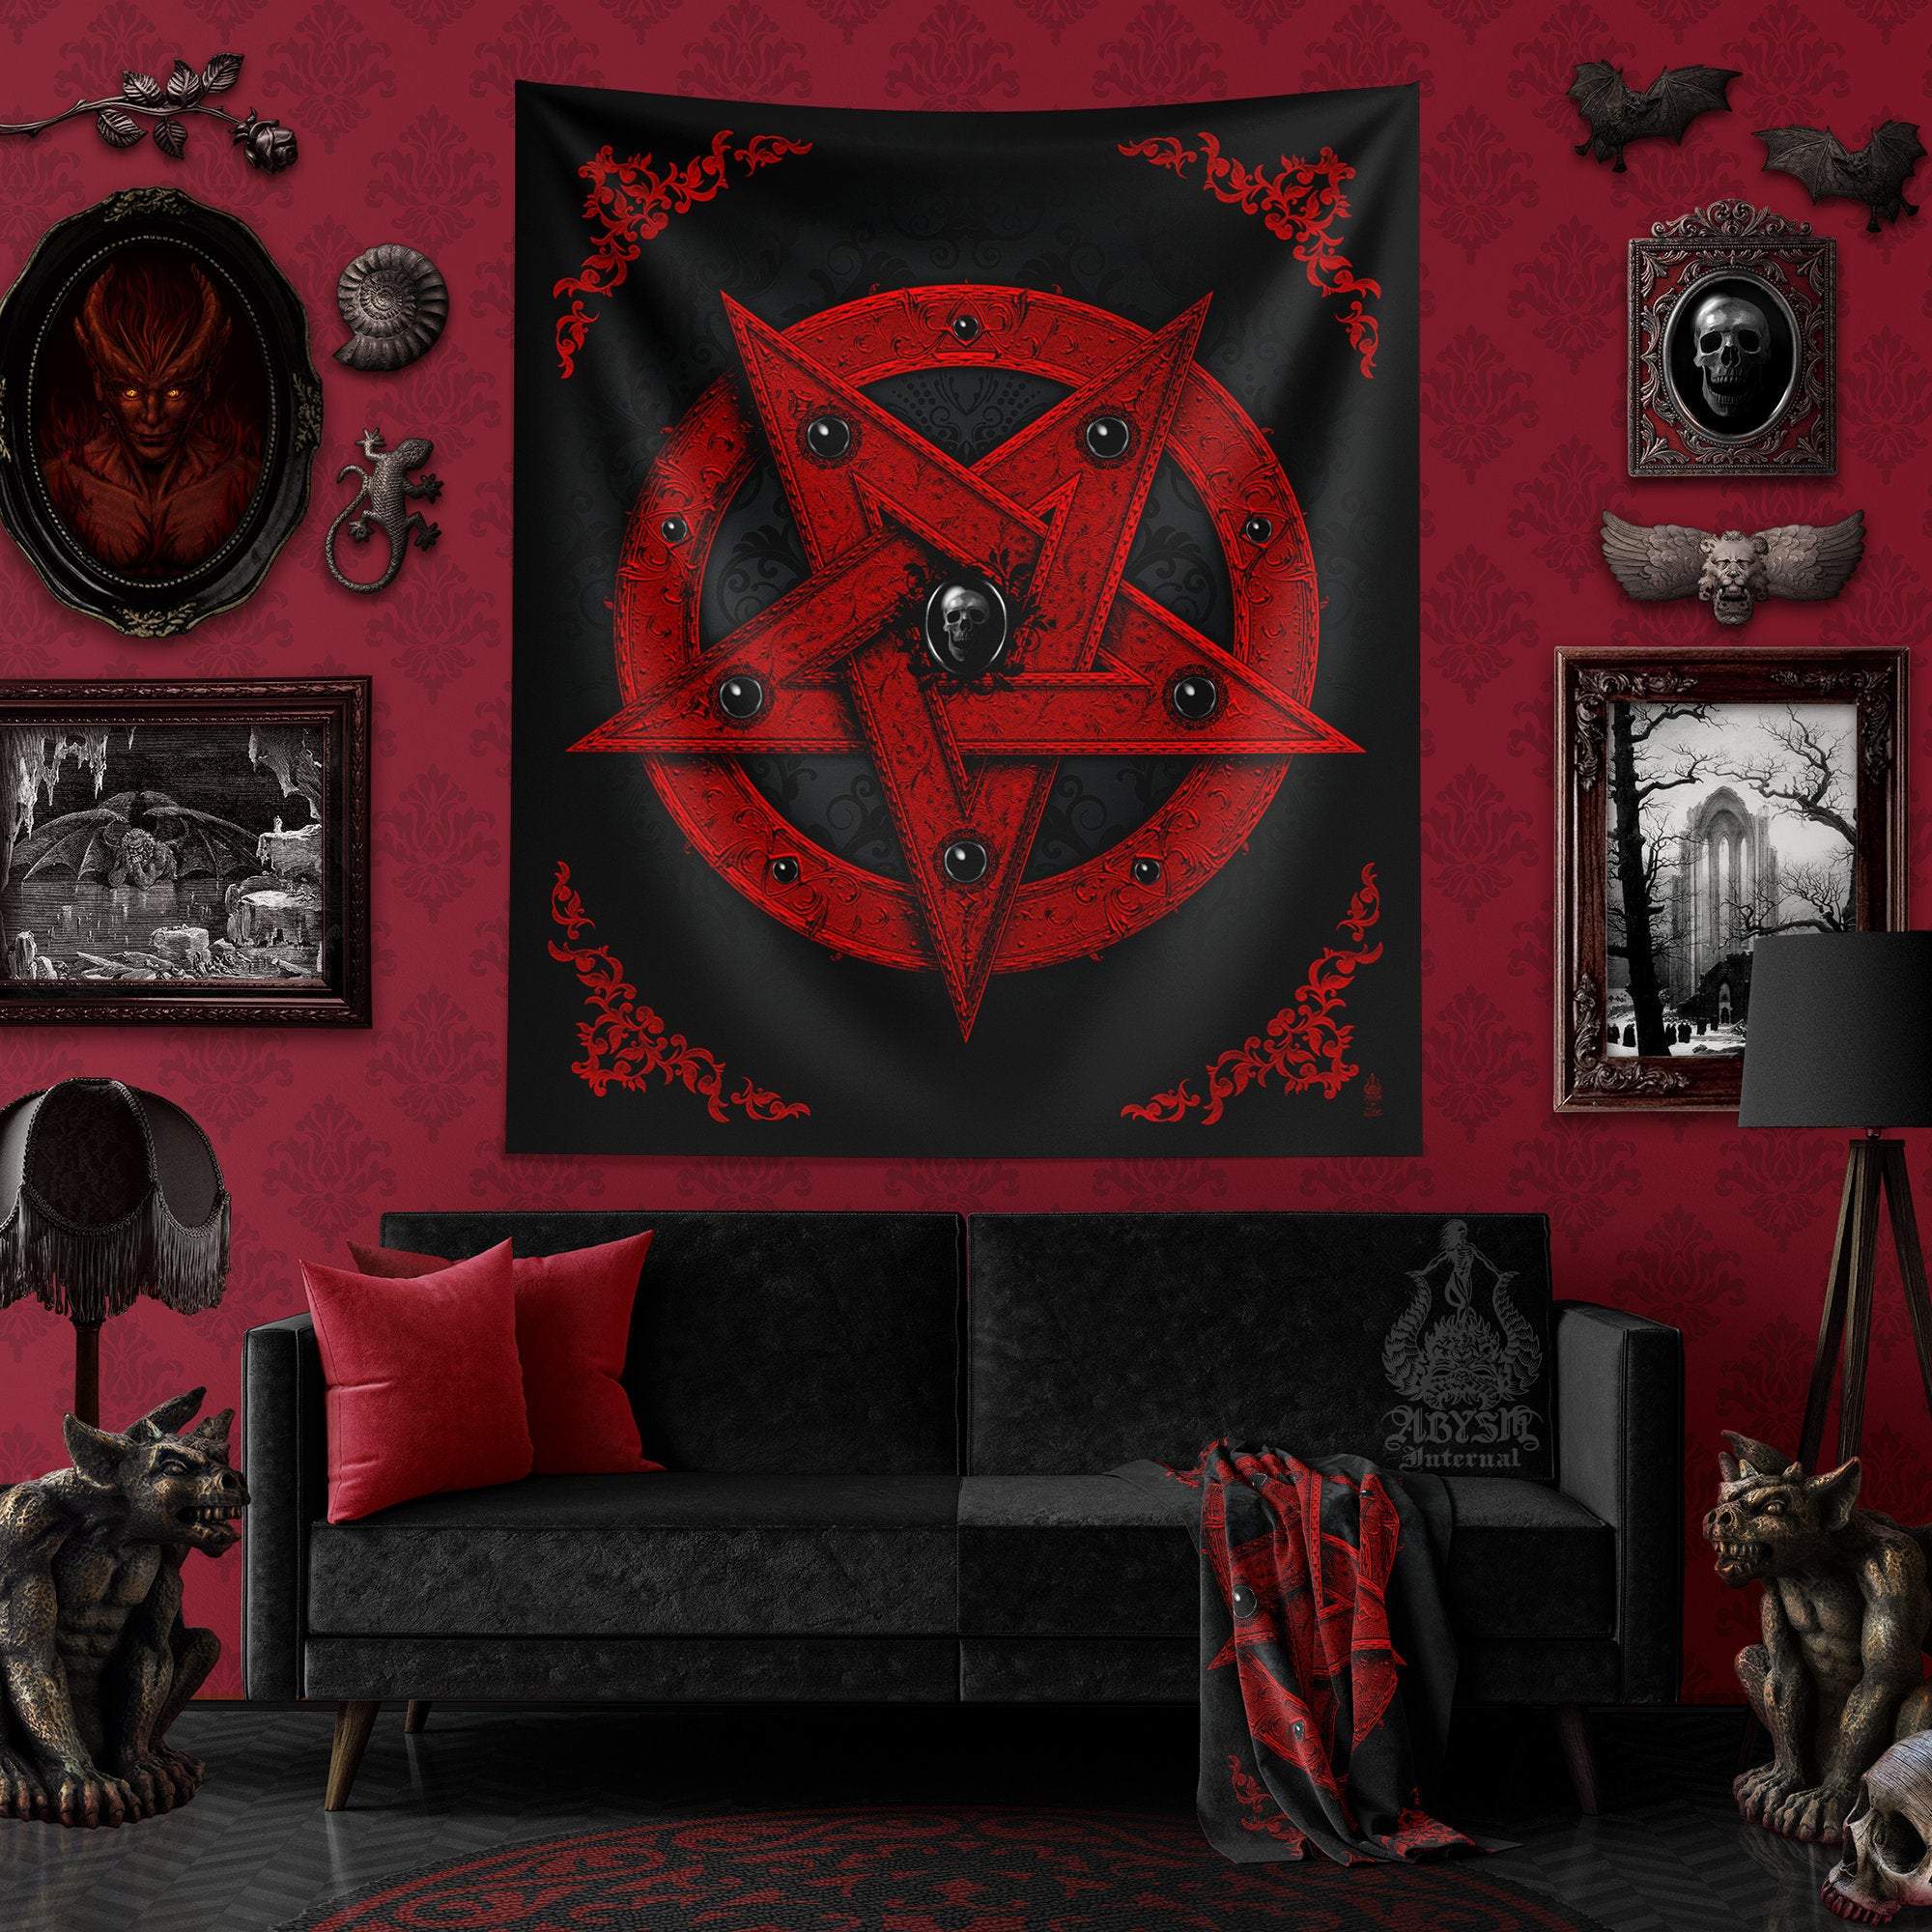 Pentagram Tapestry, Occult Wall Hanging, Satanic Home Decor, Art Print - Red - Abysm Internal